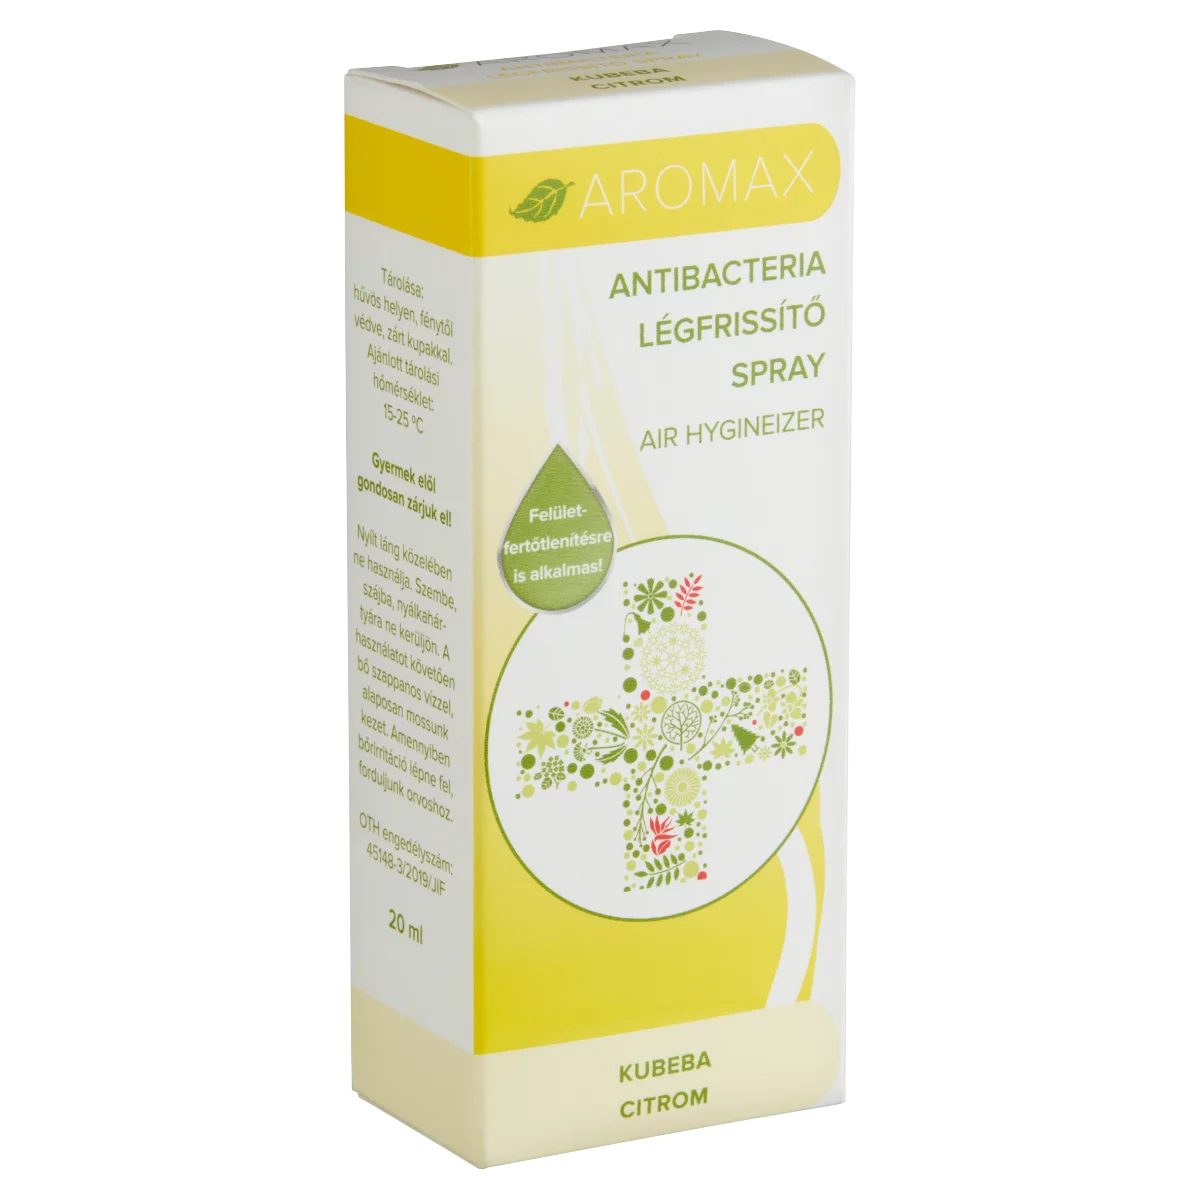 Aromax Antibacteria kubeba-citrom légfrissítő spray 20 ml